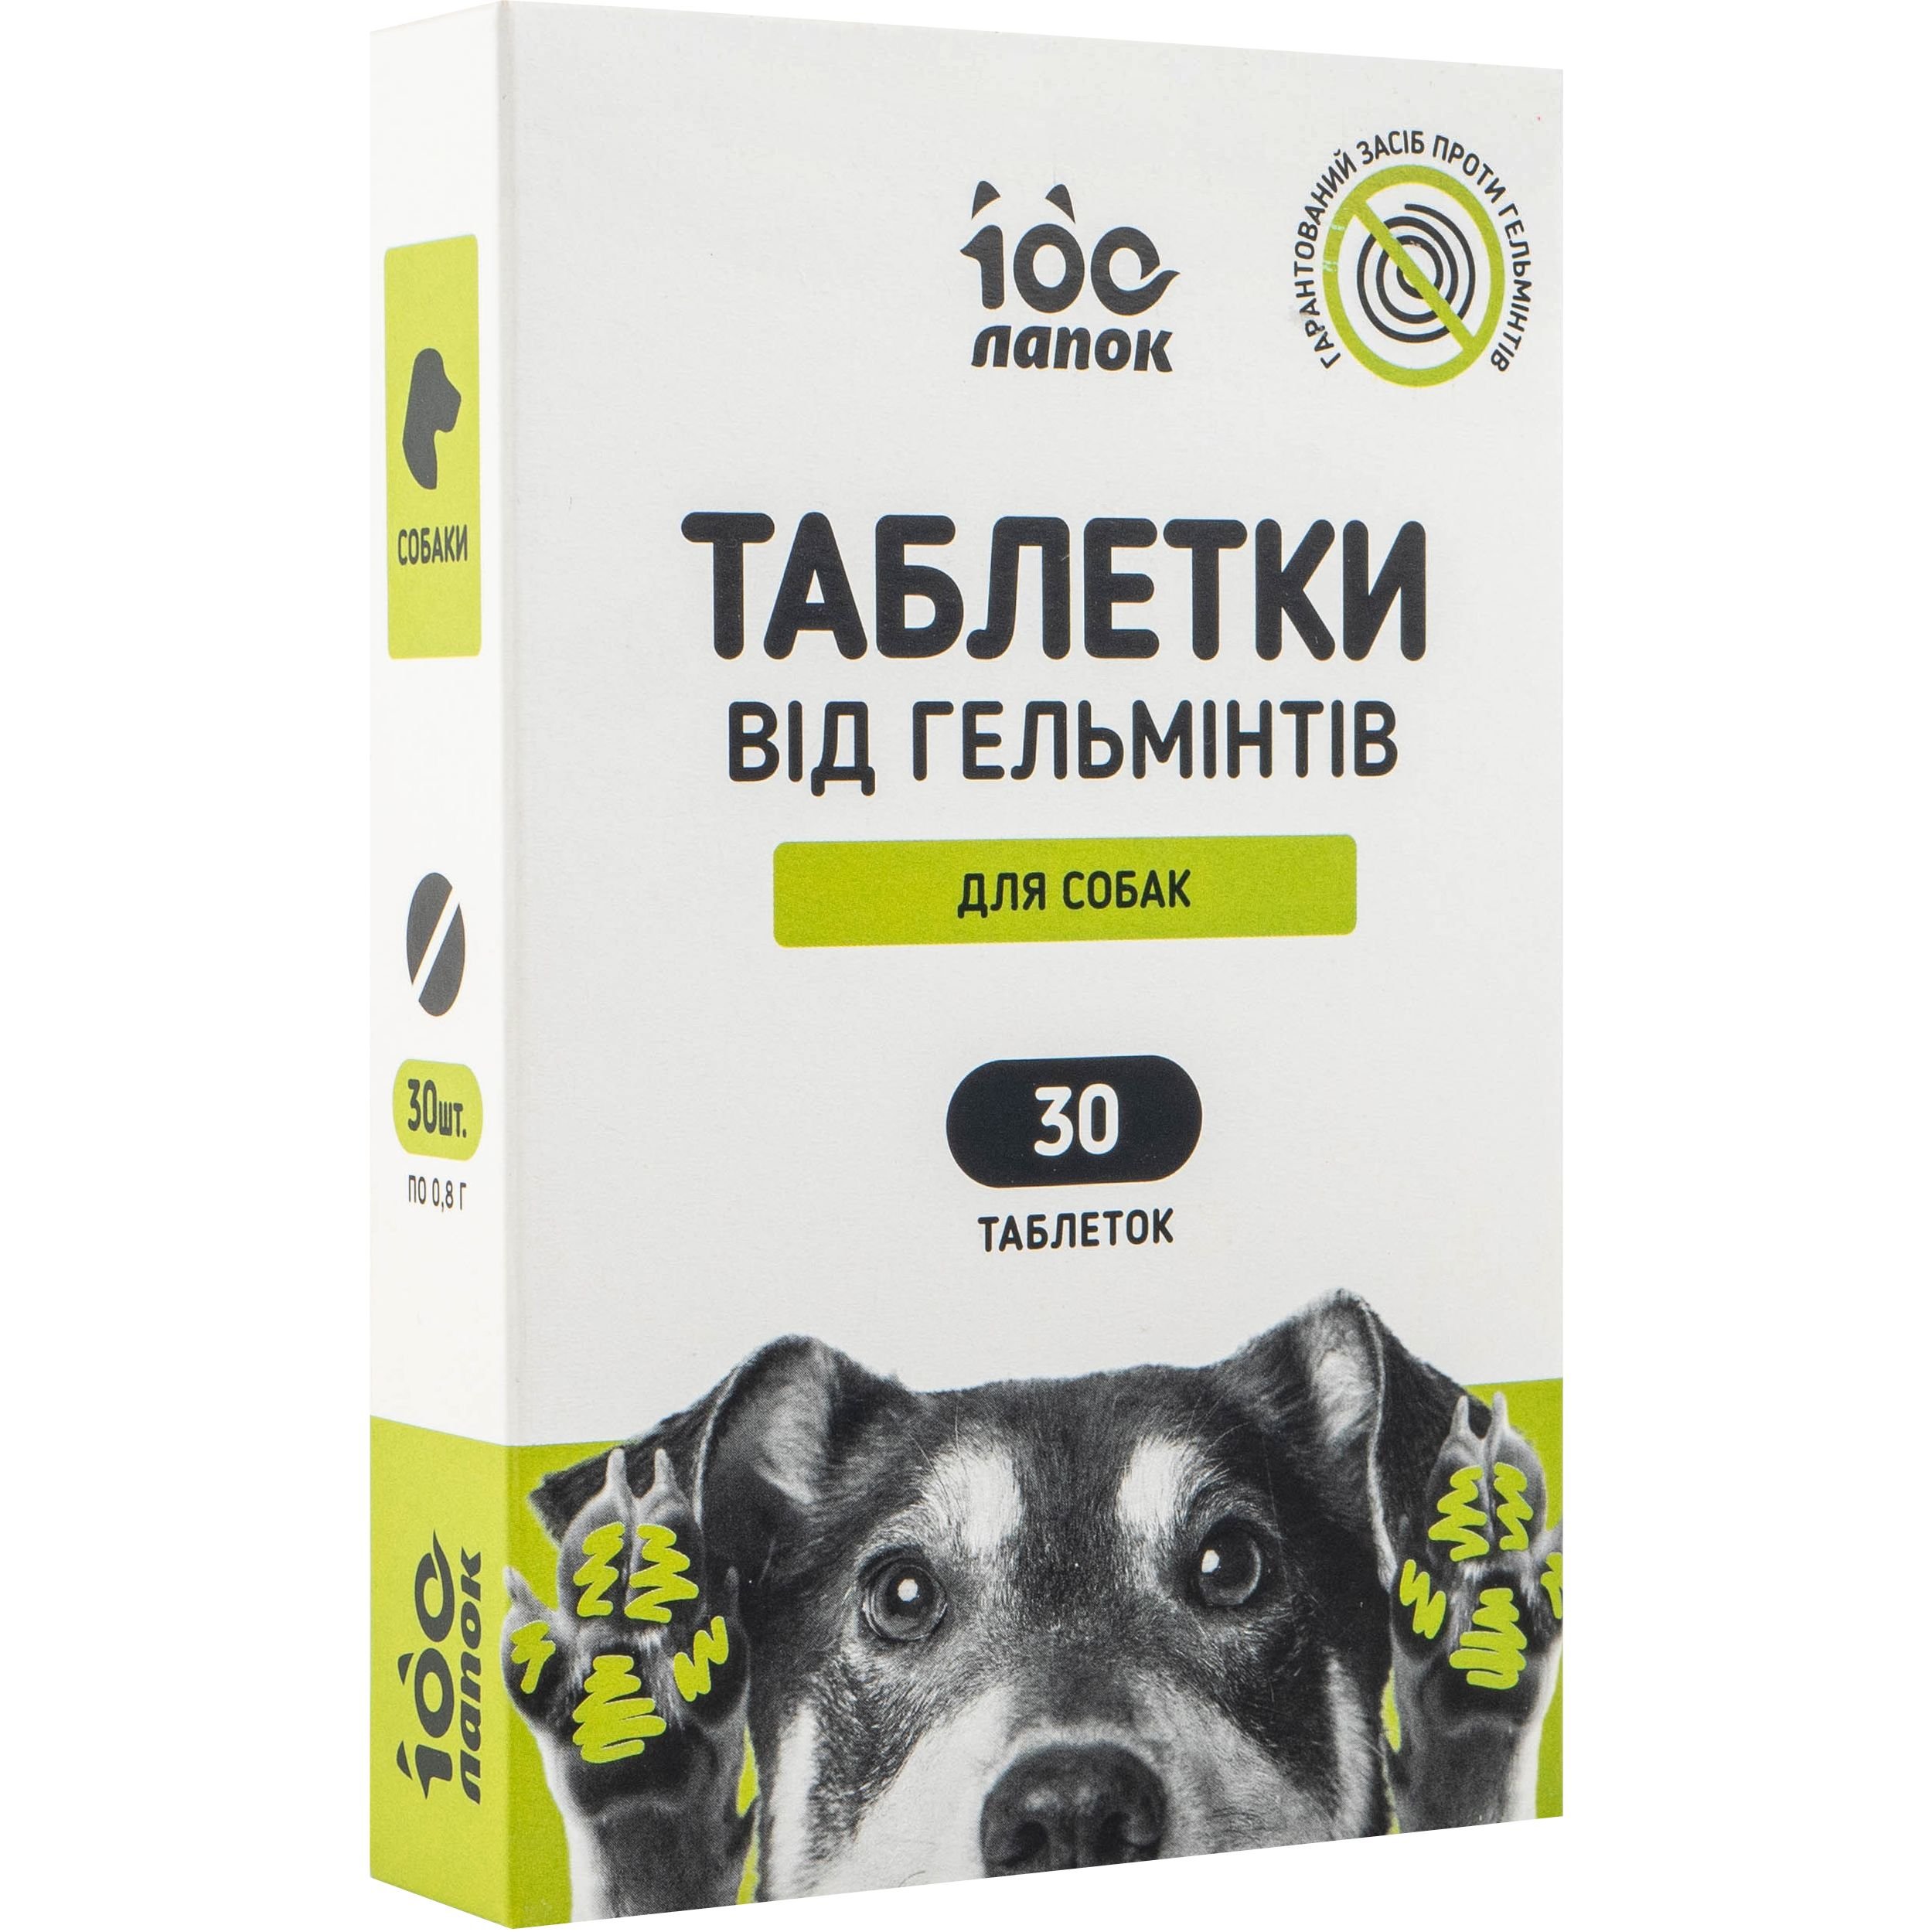 Антигельминтные таблетки Vitomax 100 Лапок для собак, 30 таблеток - фото 2